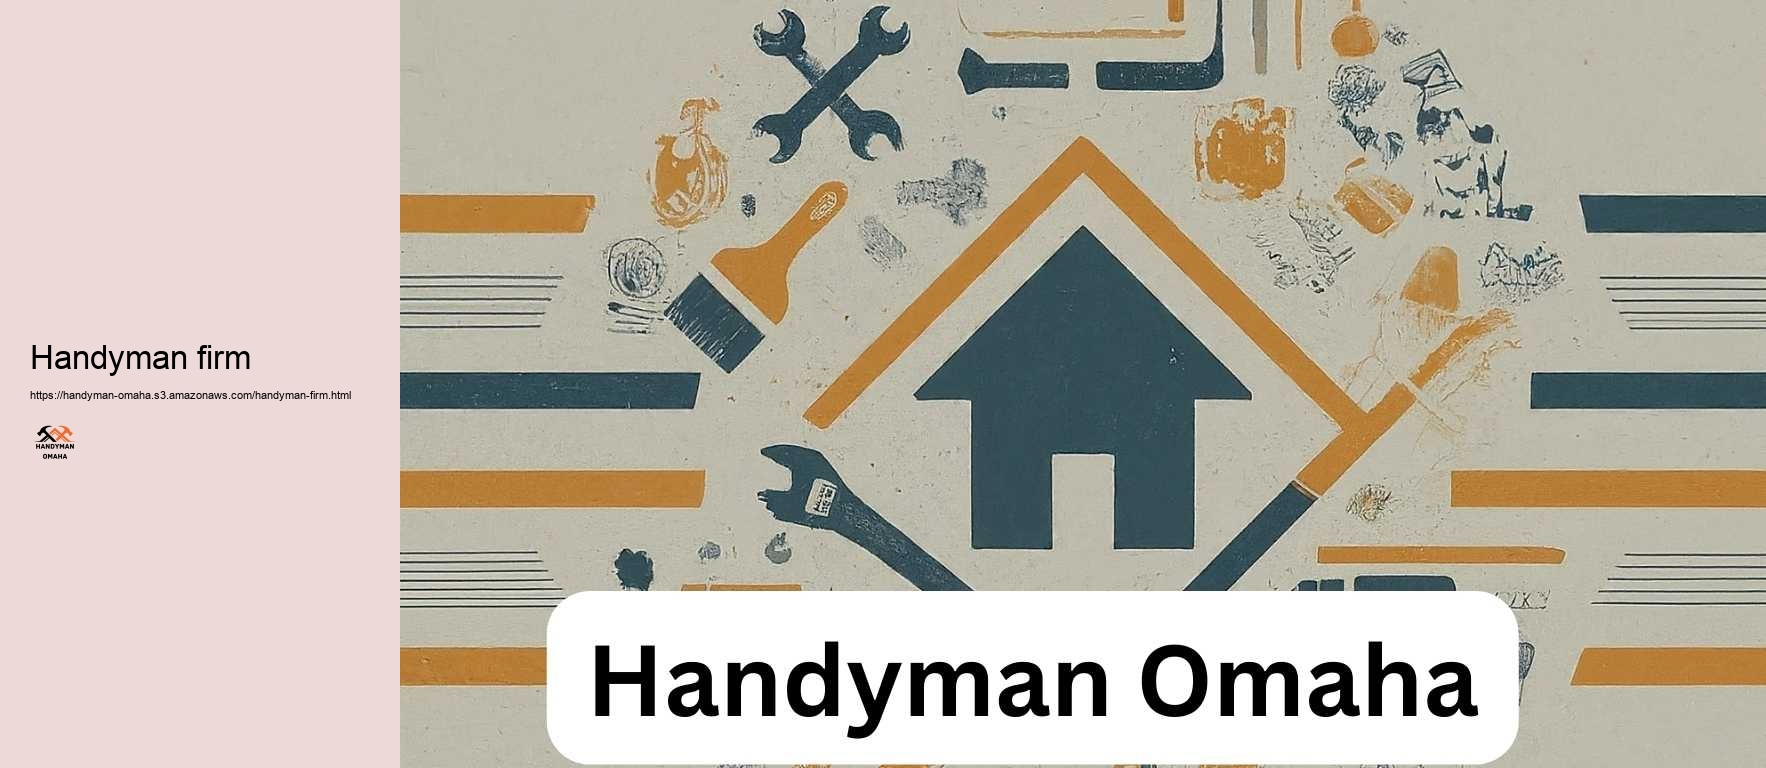 Handyman firm